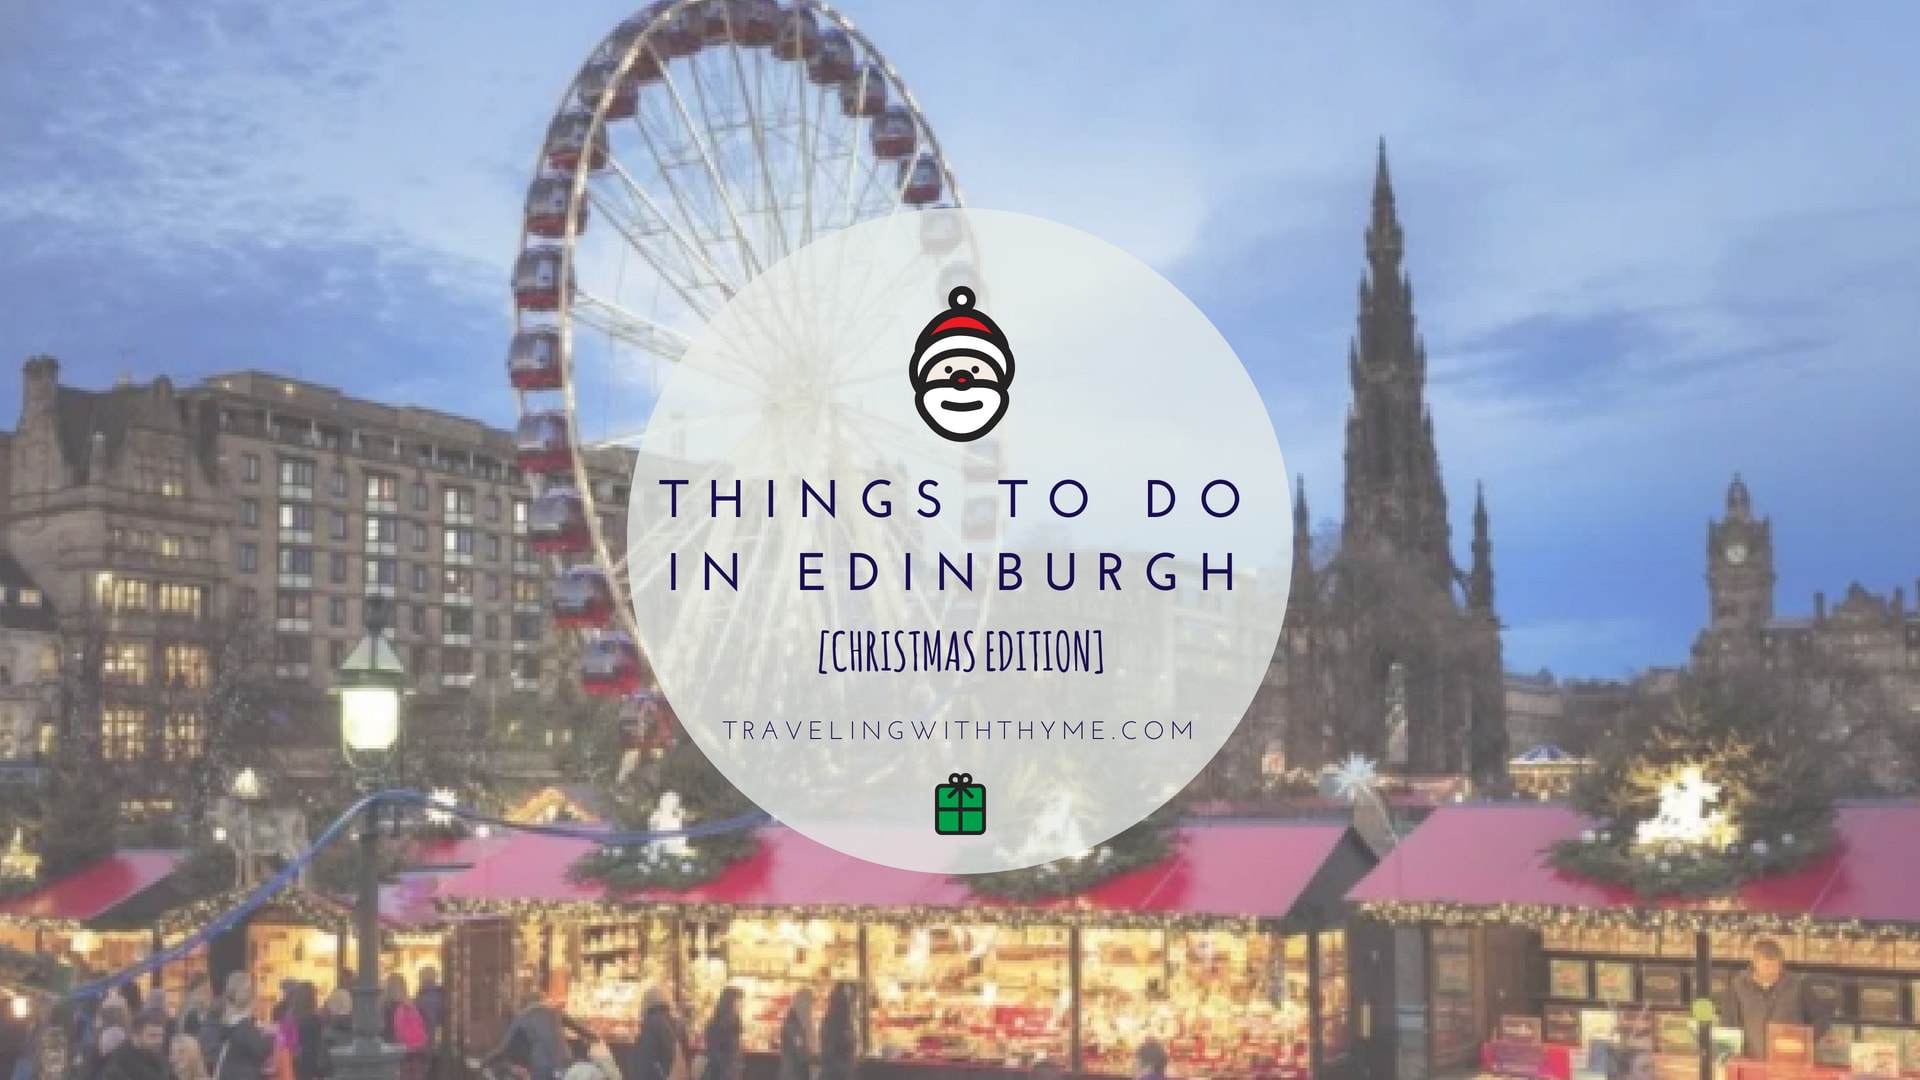 Wallpaper City Guide: Edinburgh New Edition